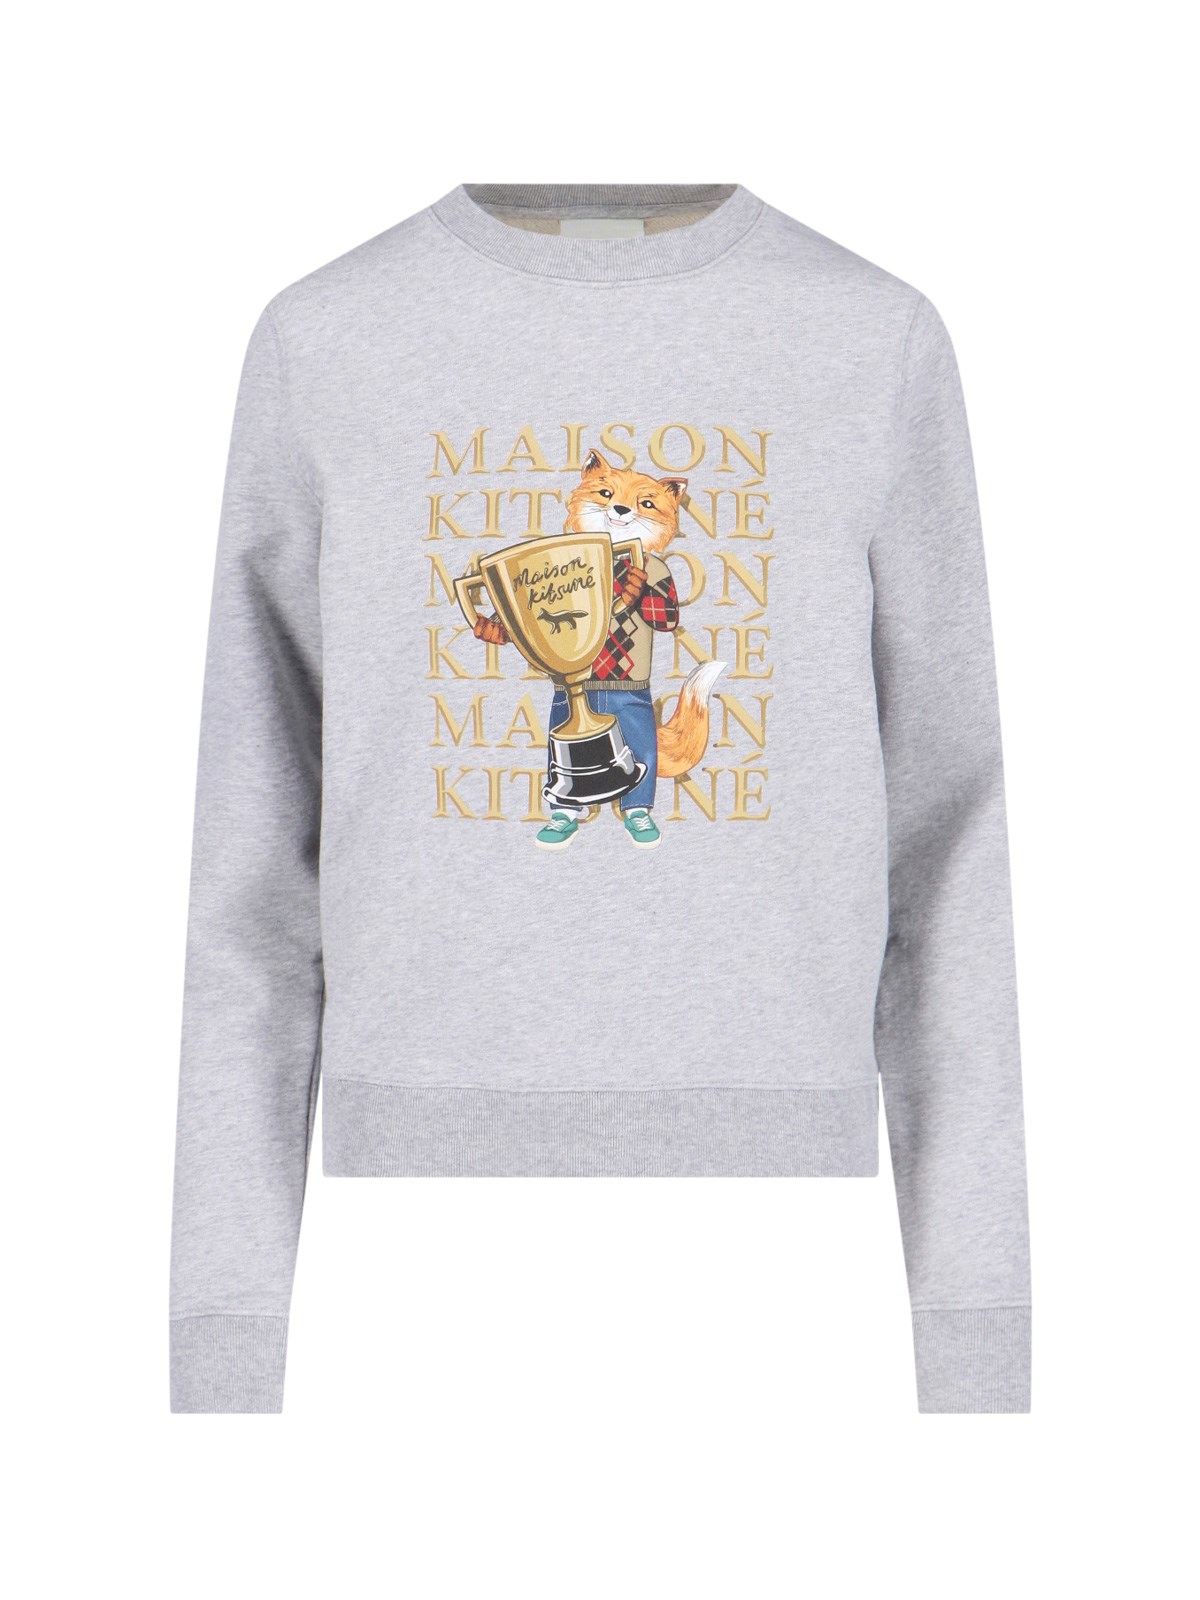 Maison Kitsuné "fox Champion" Crew Neck Sweatshirt In Gray